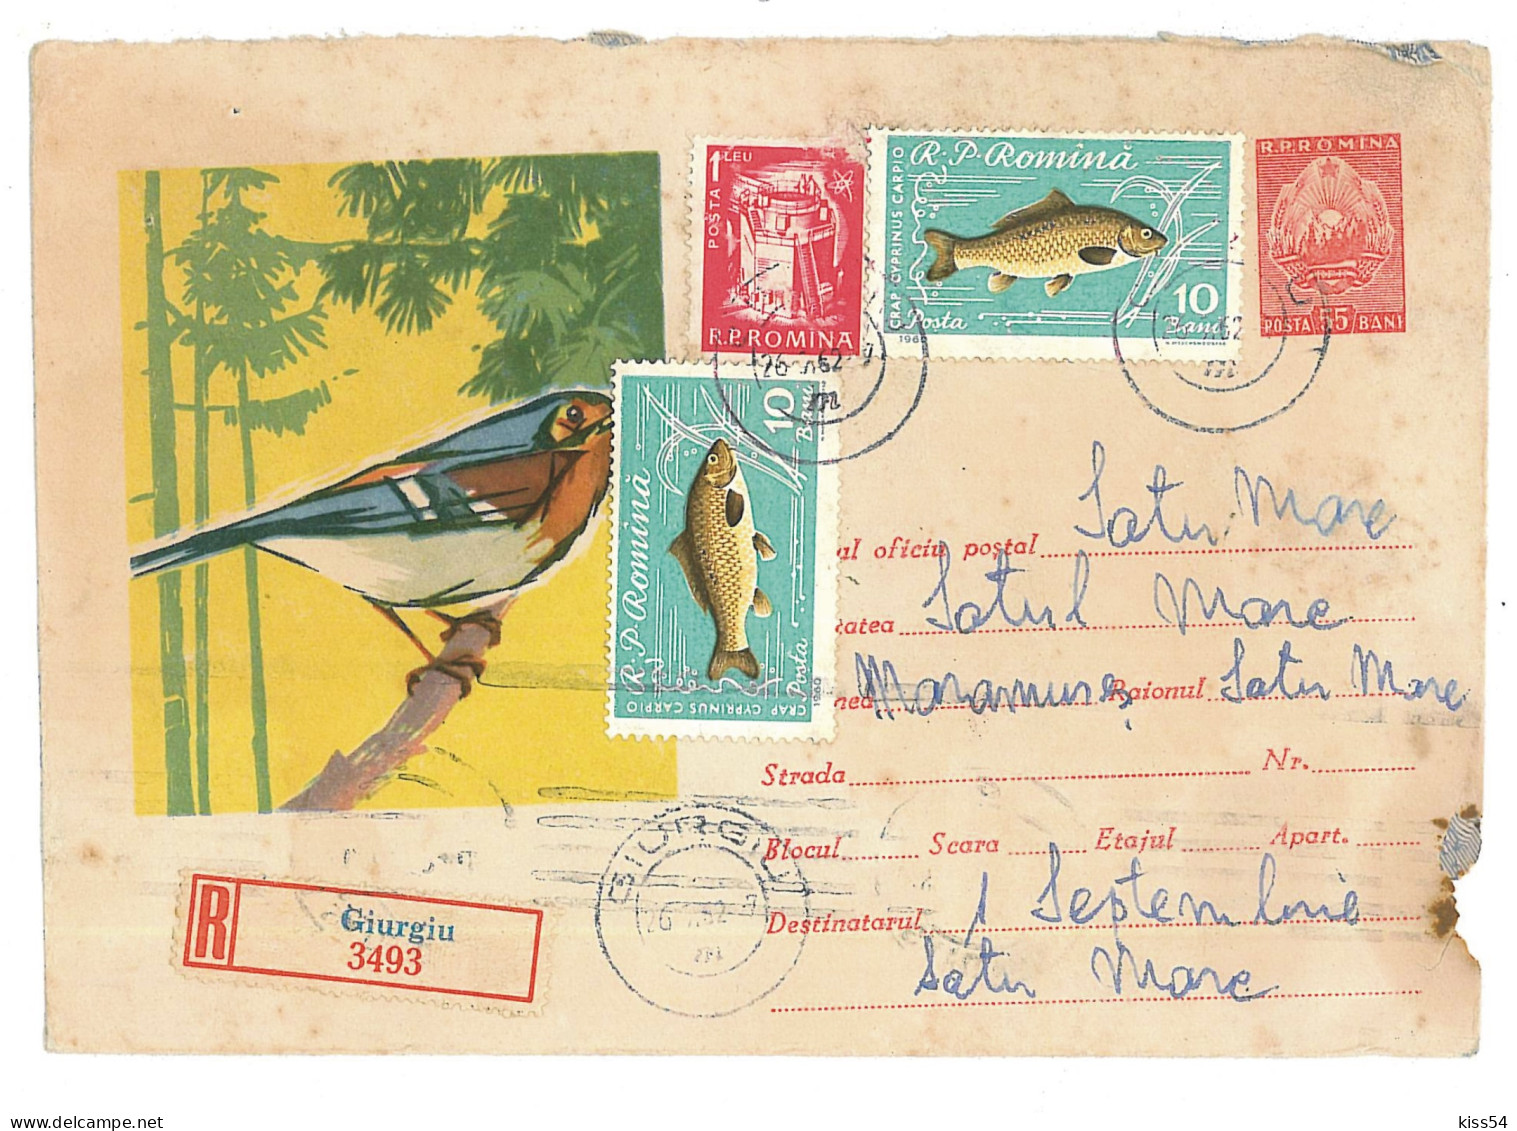 IP 62 - 0155 BIRD, Romania - Registered Stationery - Used - 1962 - Climbing Birds